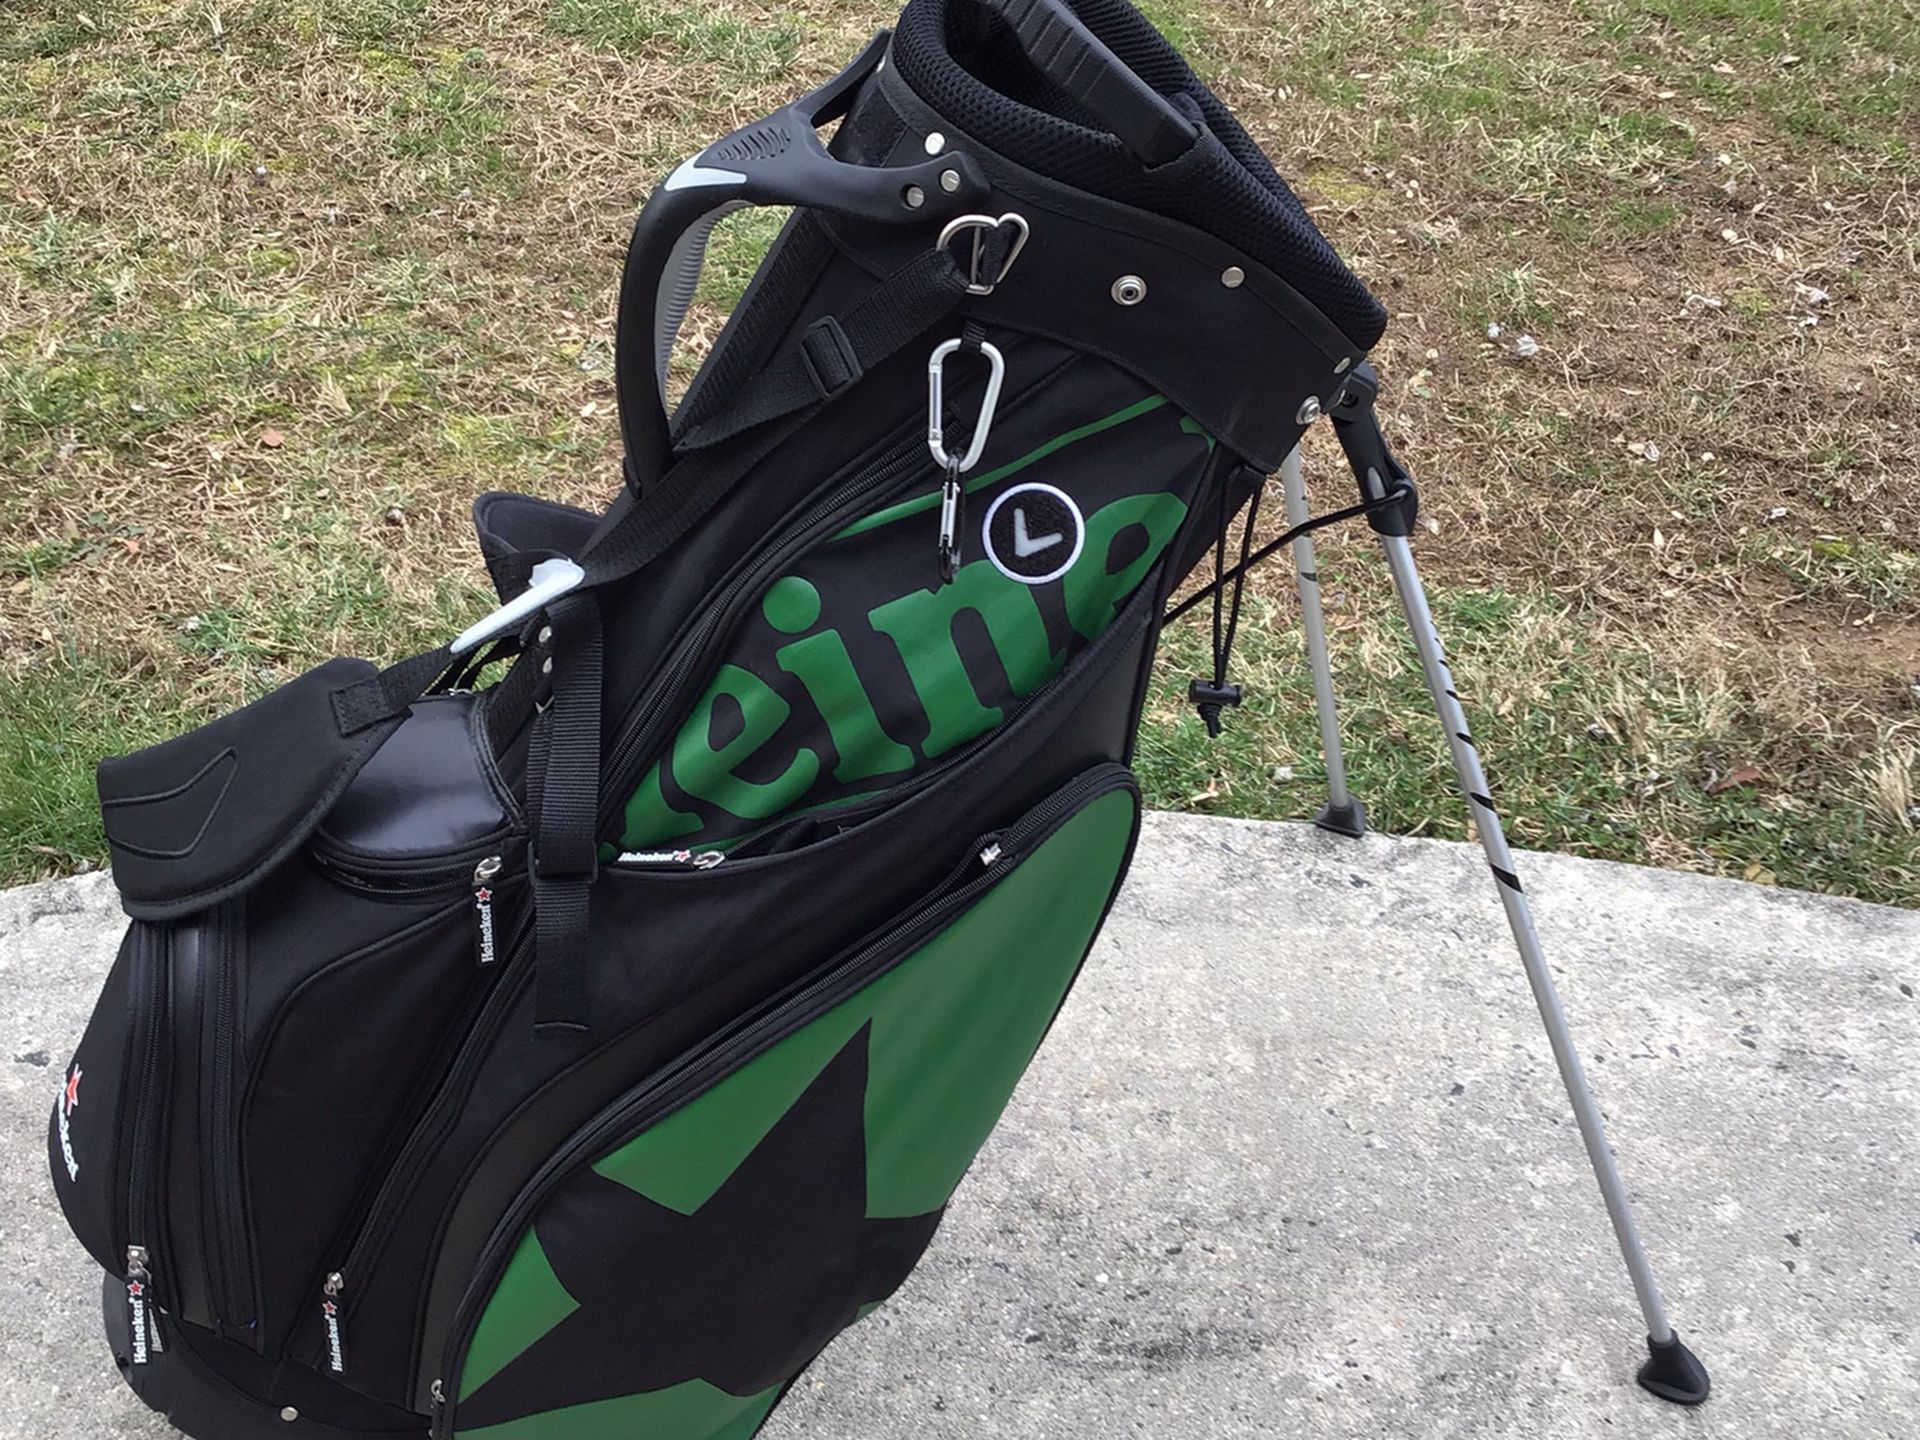 Callaway golf limited edition Heineken stand bag